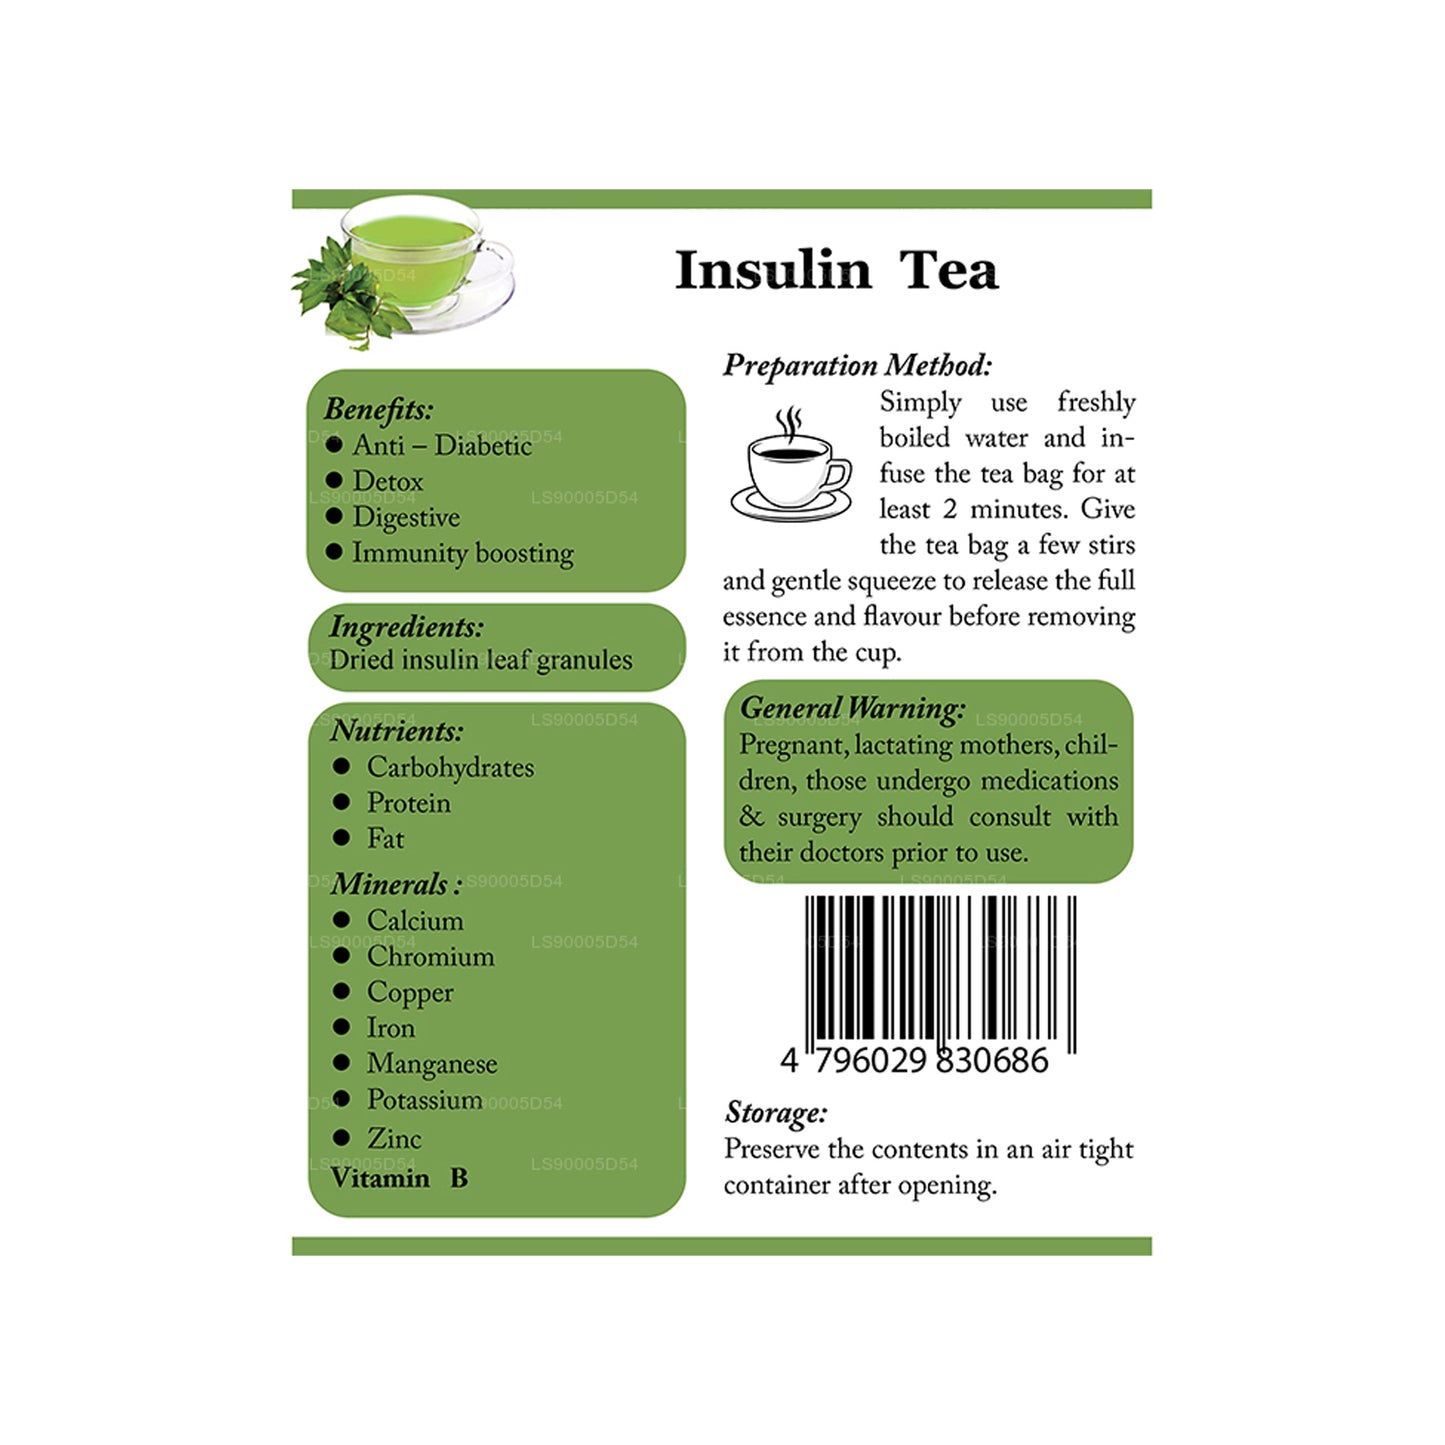 Lifetone Insulin Tea (30g)